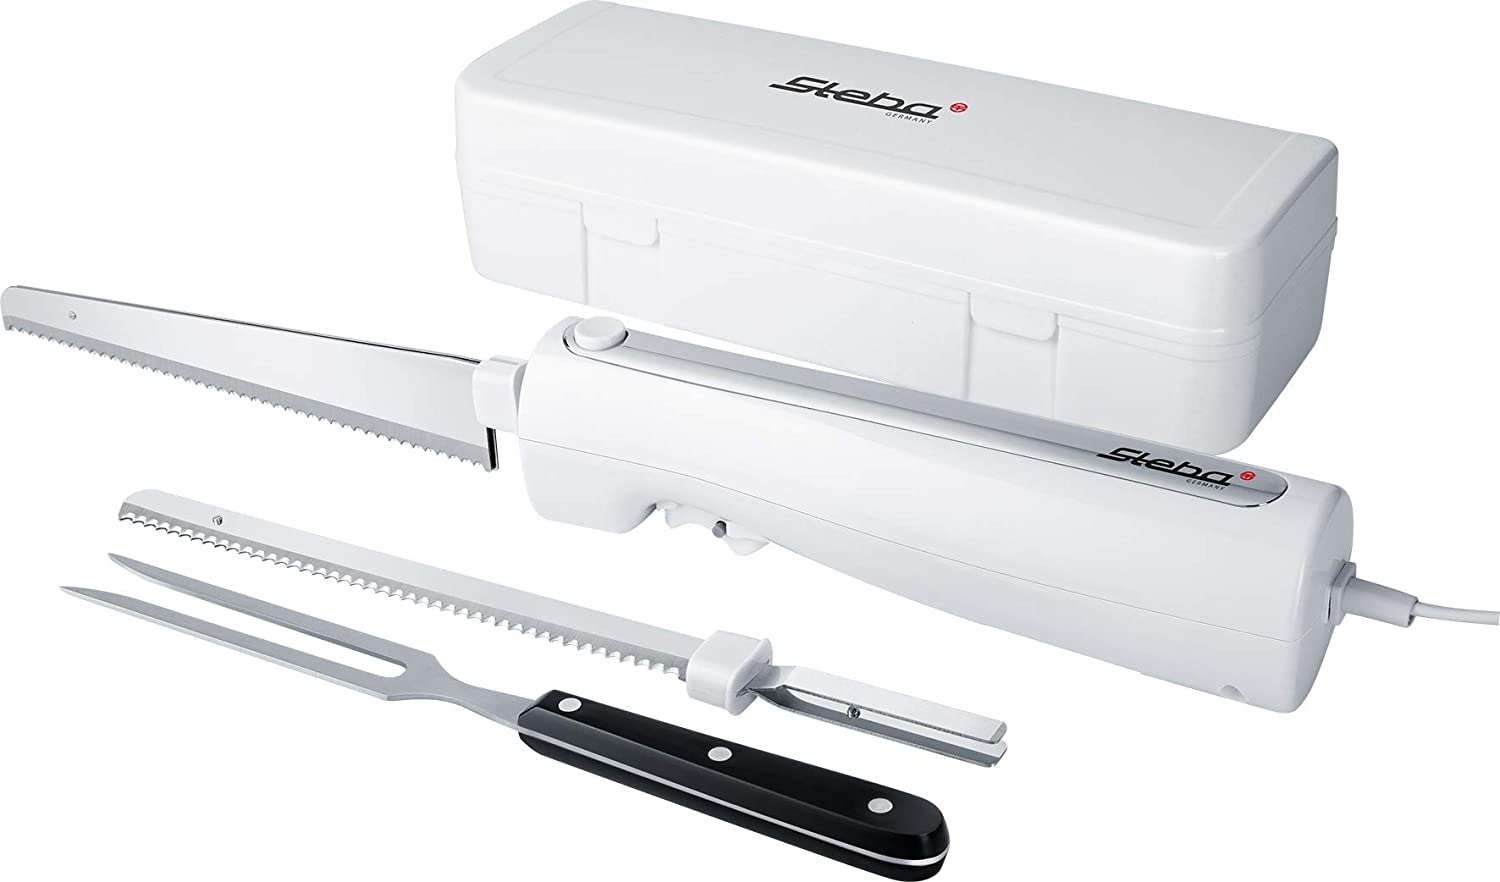 Steba electric knife EM 3, ergonomic housing for comfortable operation, inc